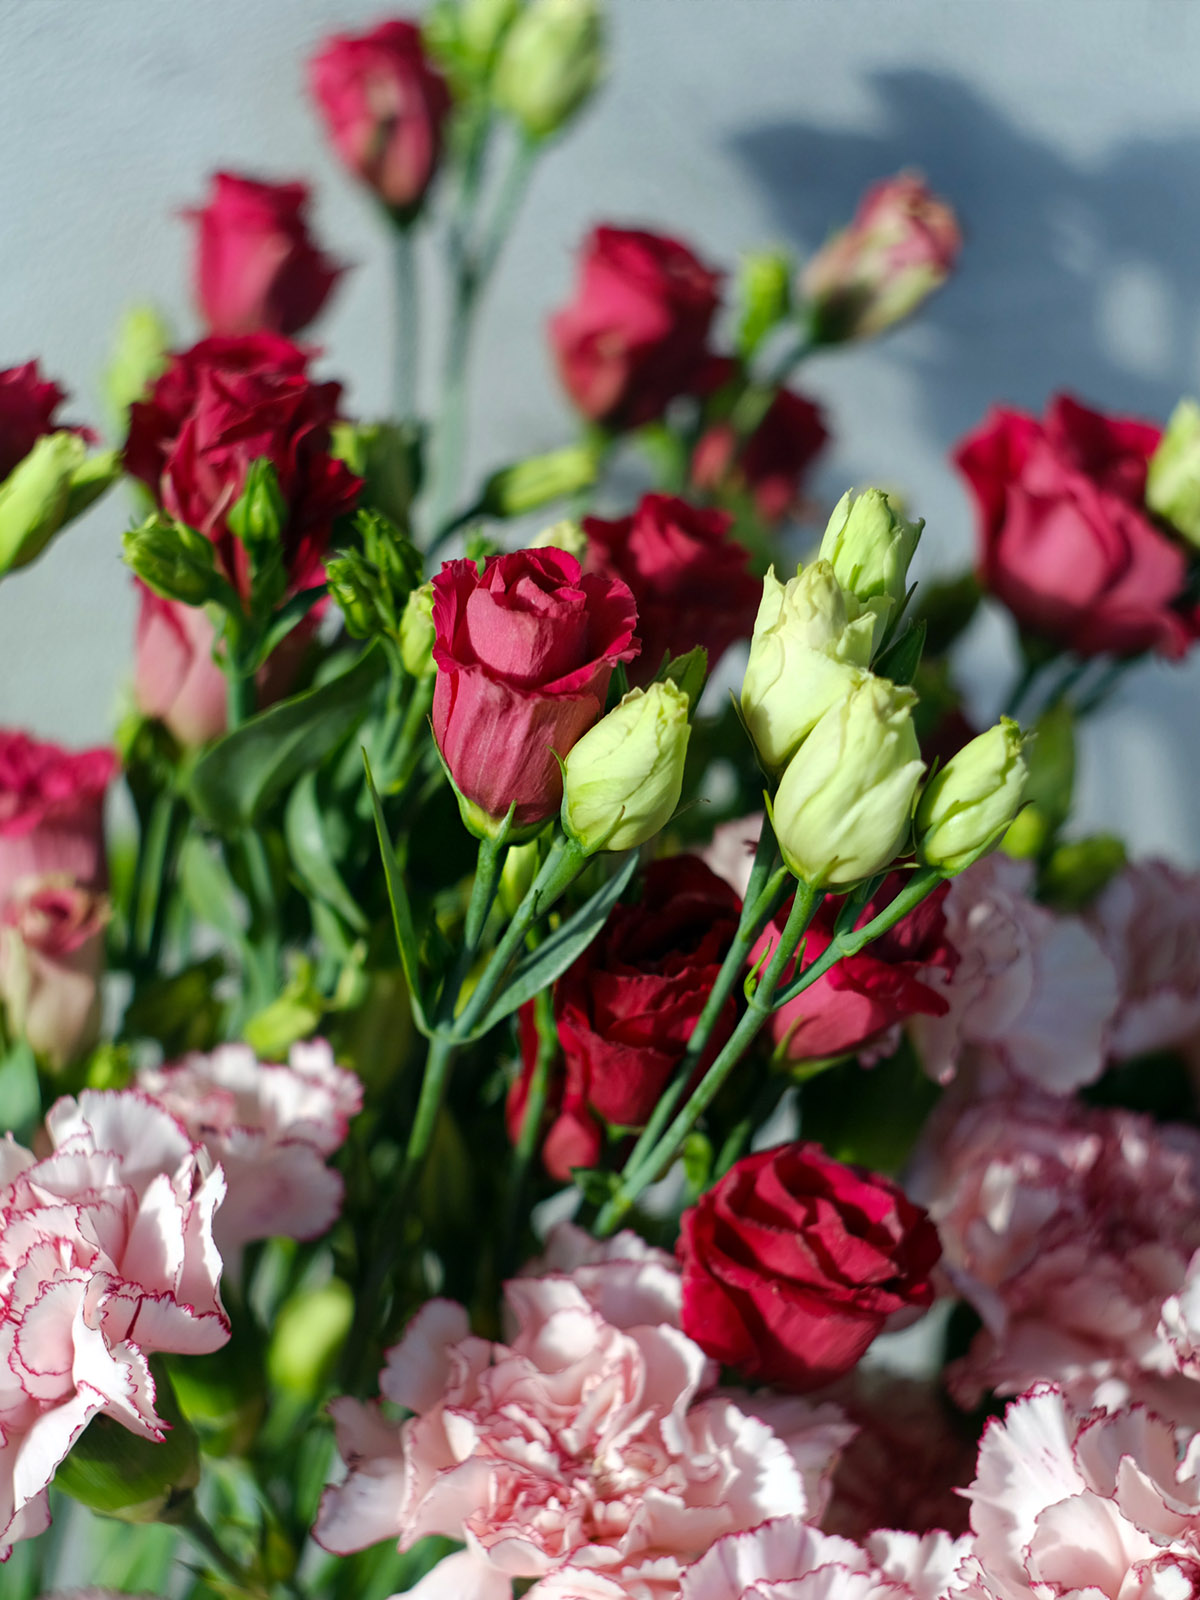 Red Lisianthus and carnations by Aleksandra Sapozhnikova on Thursd